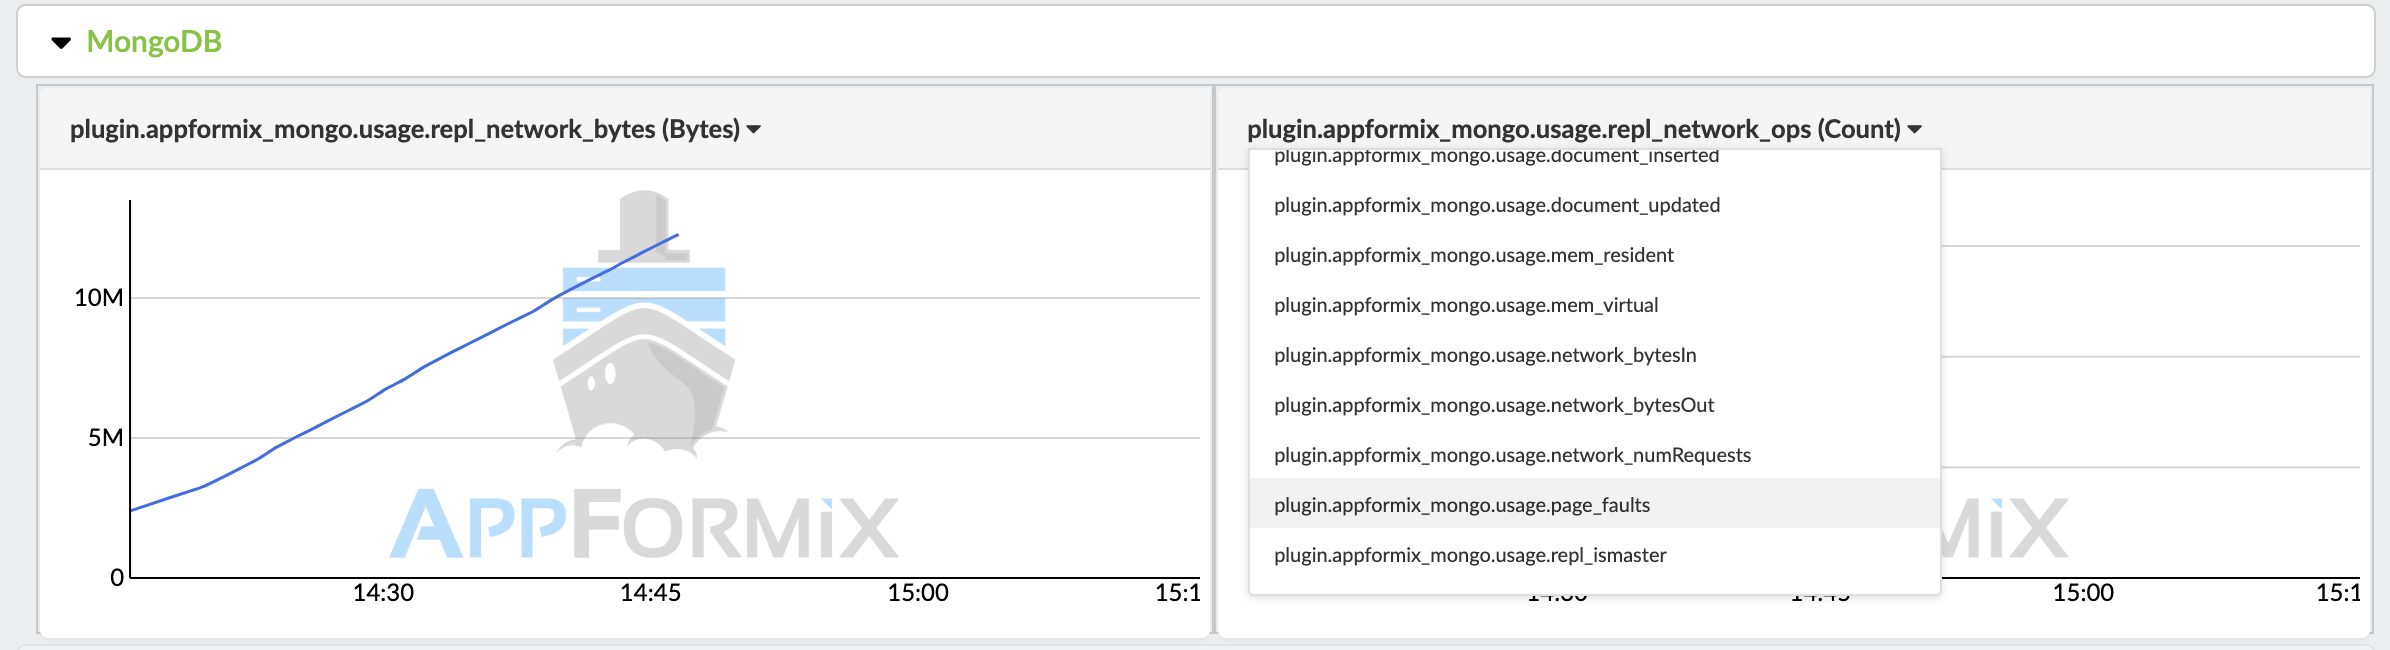 MongoDB Metrics